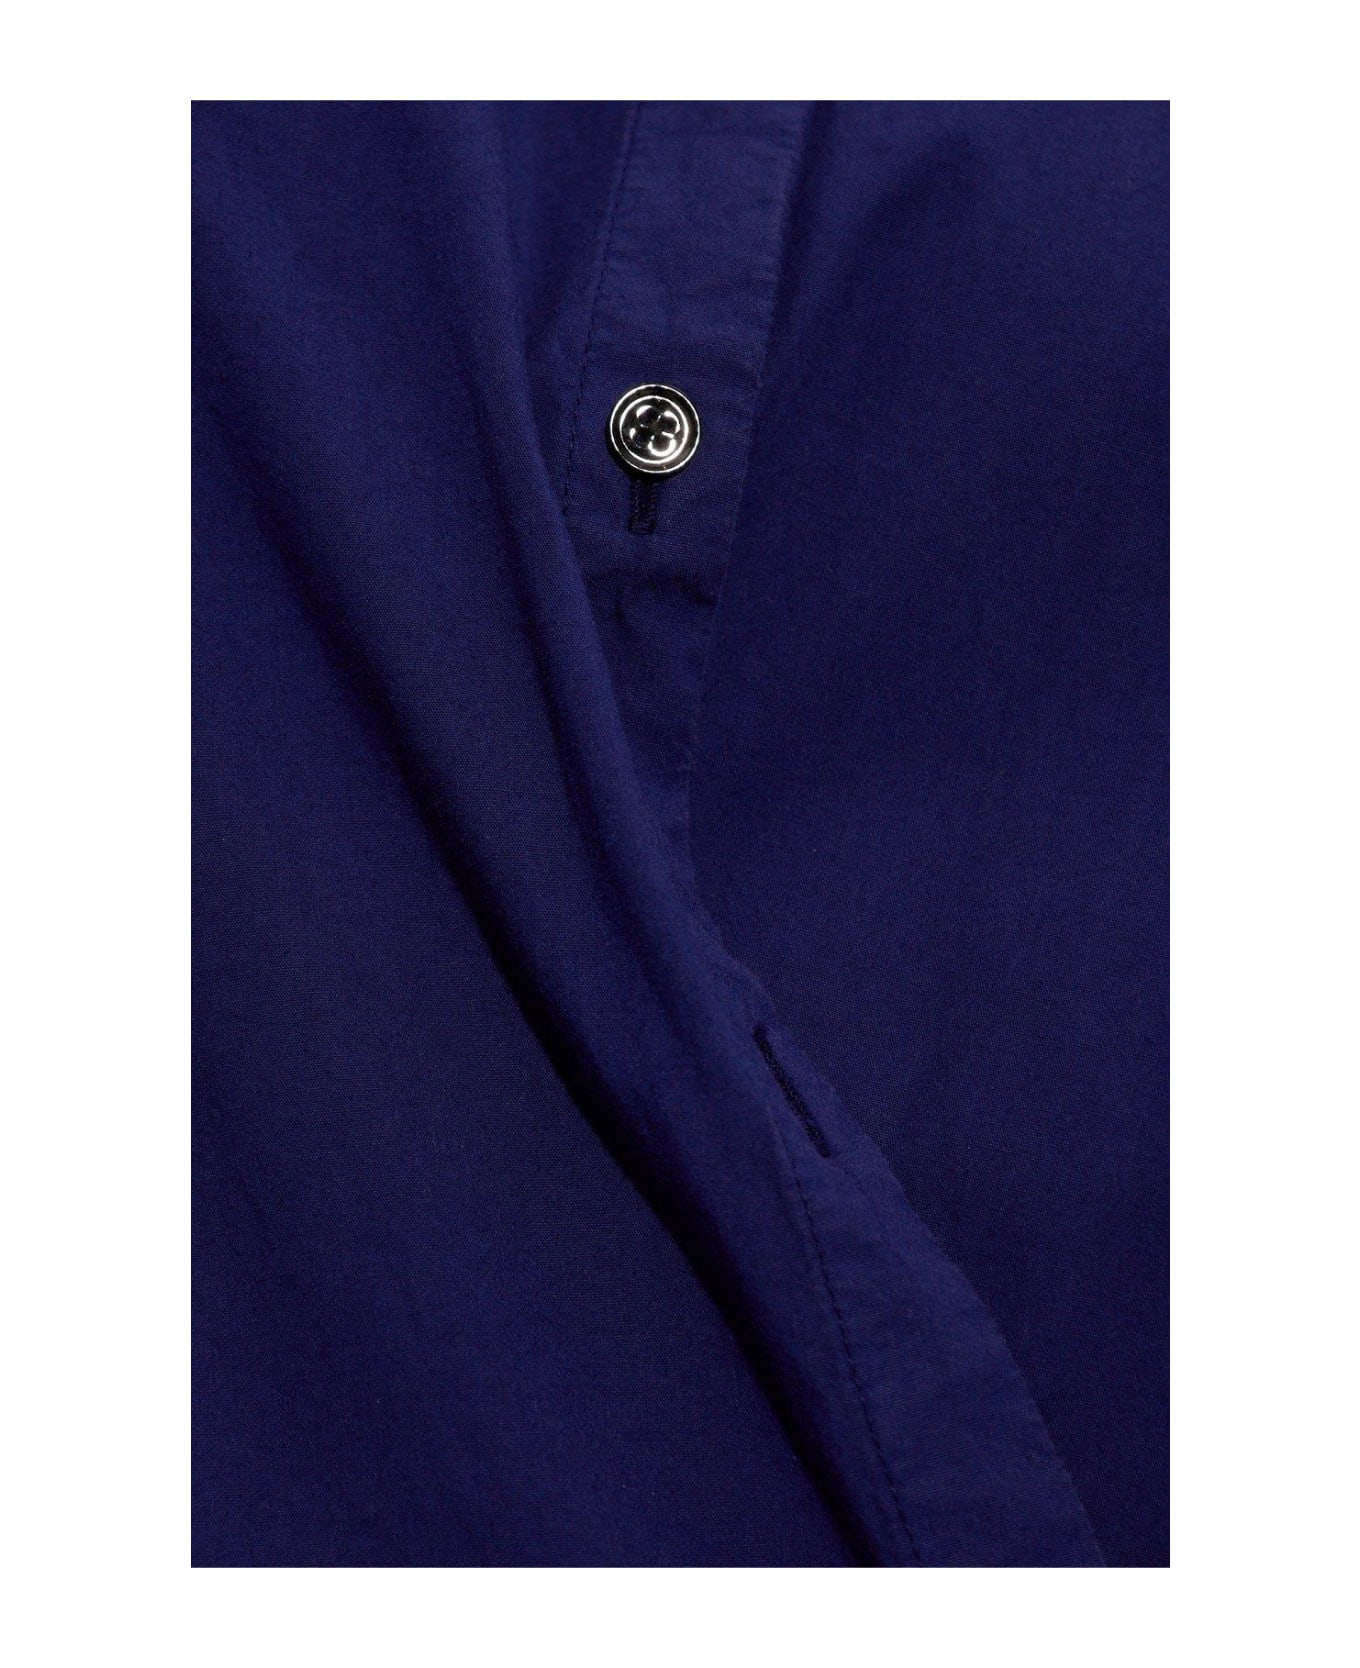 Lemaire Asymmetric Twisted Midi Shirt Dress - Blue Violet